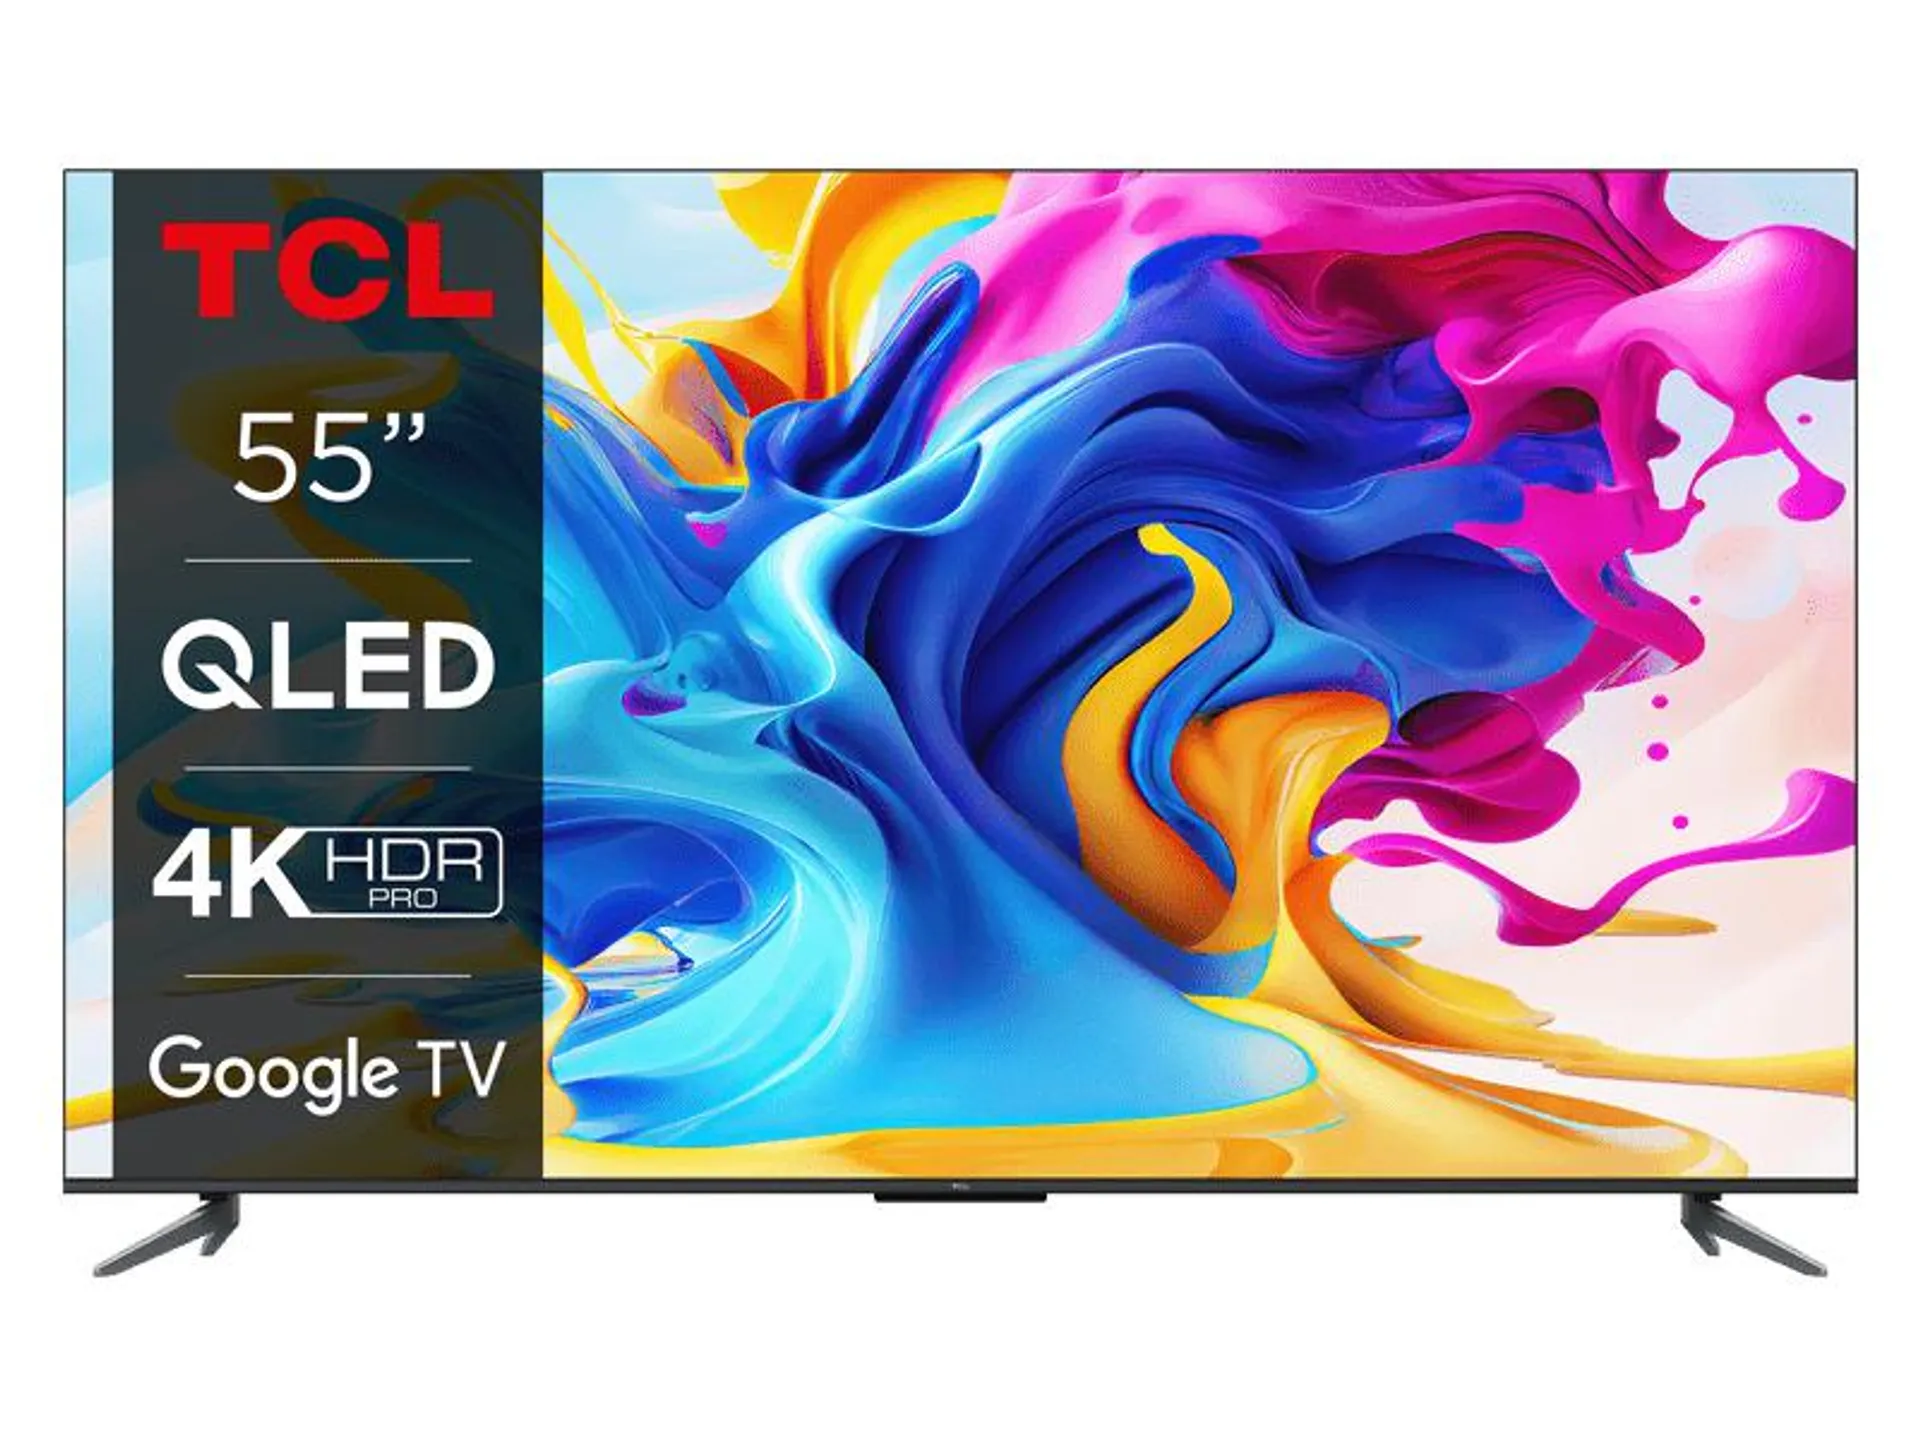 TCL 55C645 55" 4K QLED Google TV